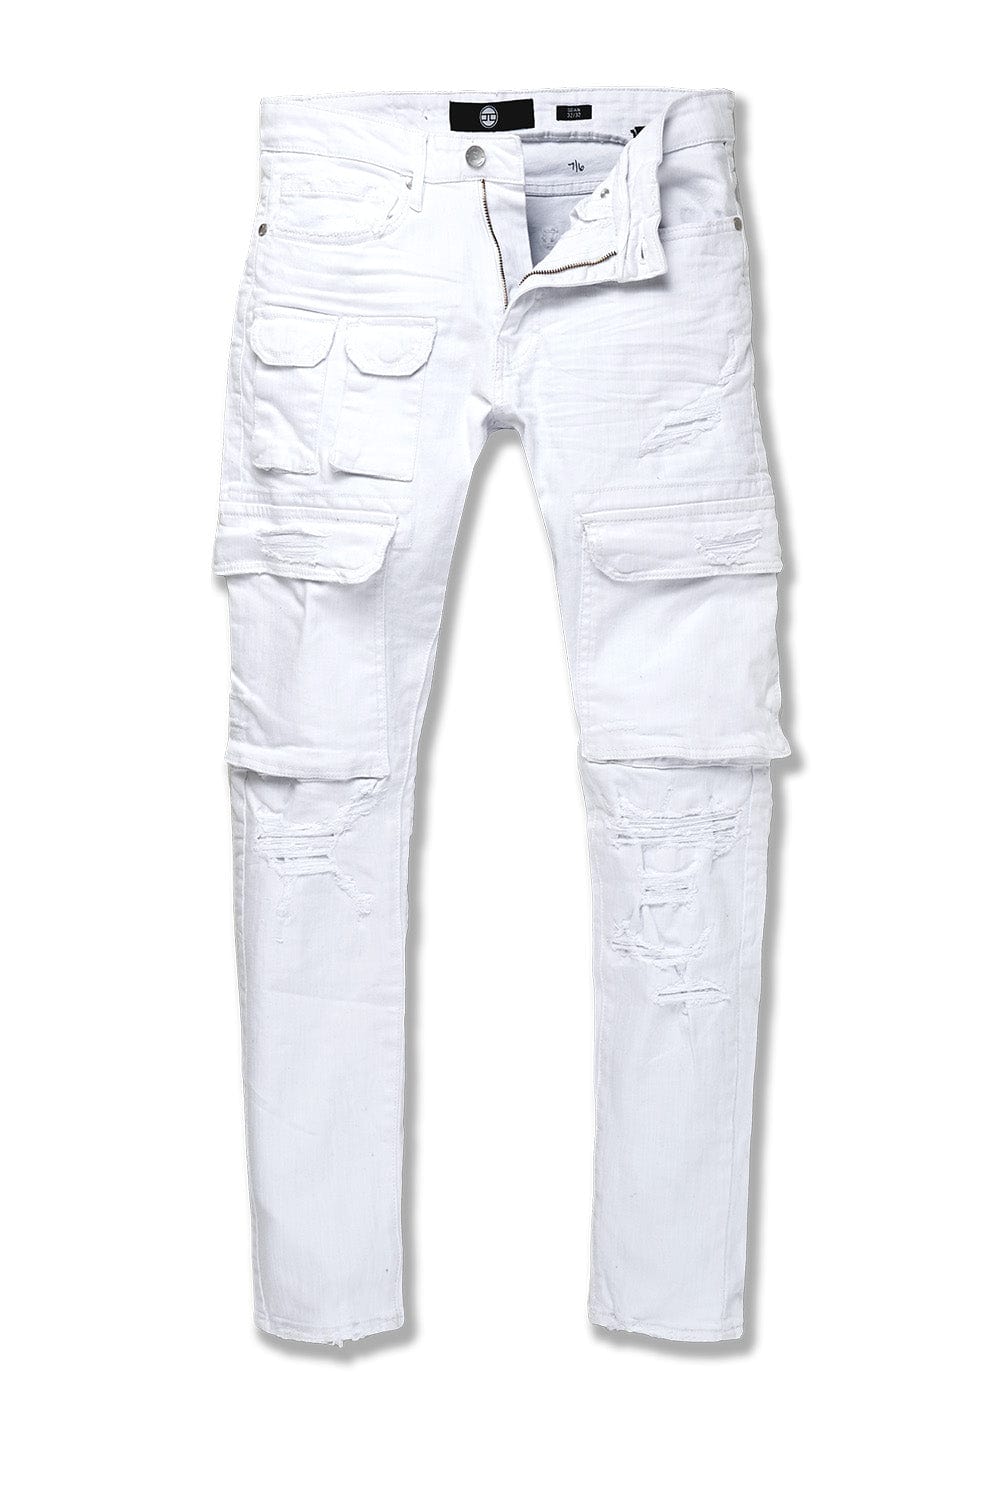 Jordan Craig Sean - Tribeca Cargo Pants (White) 30/30 / White